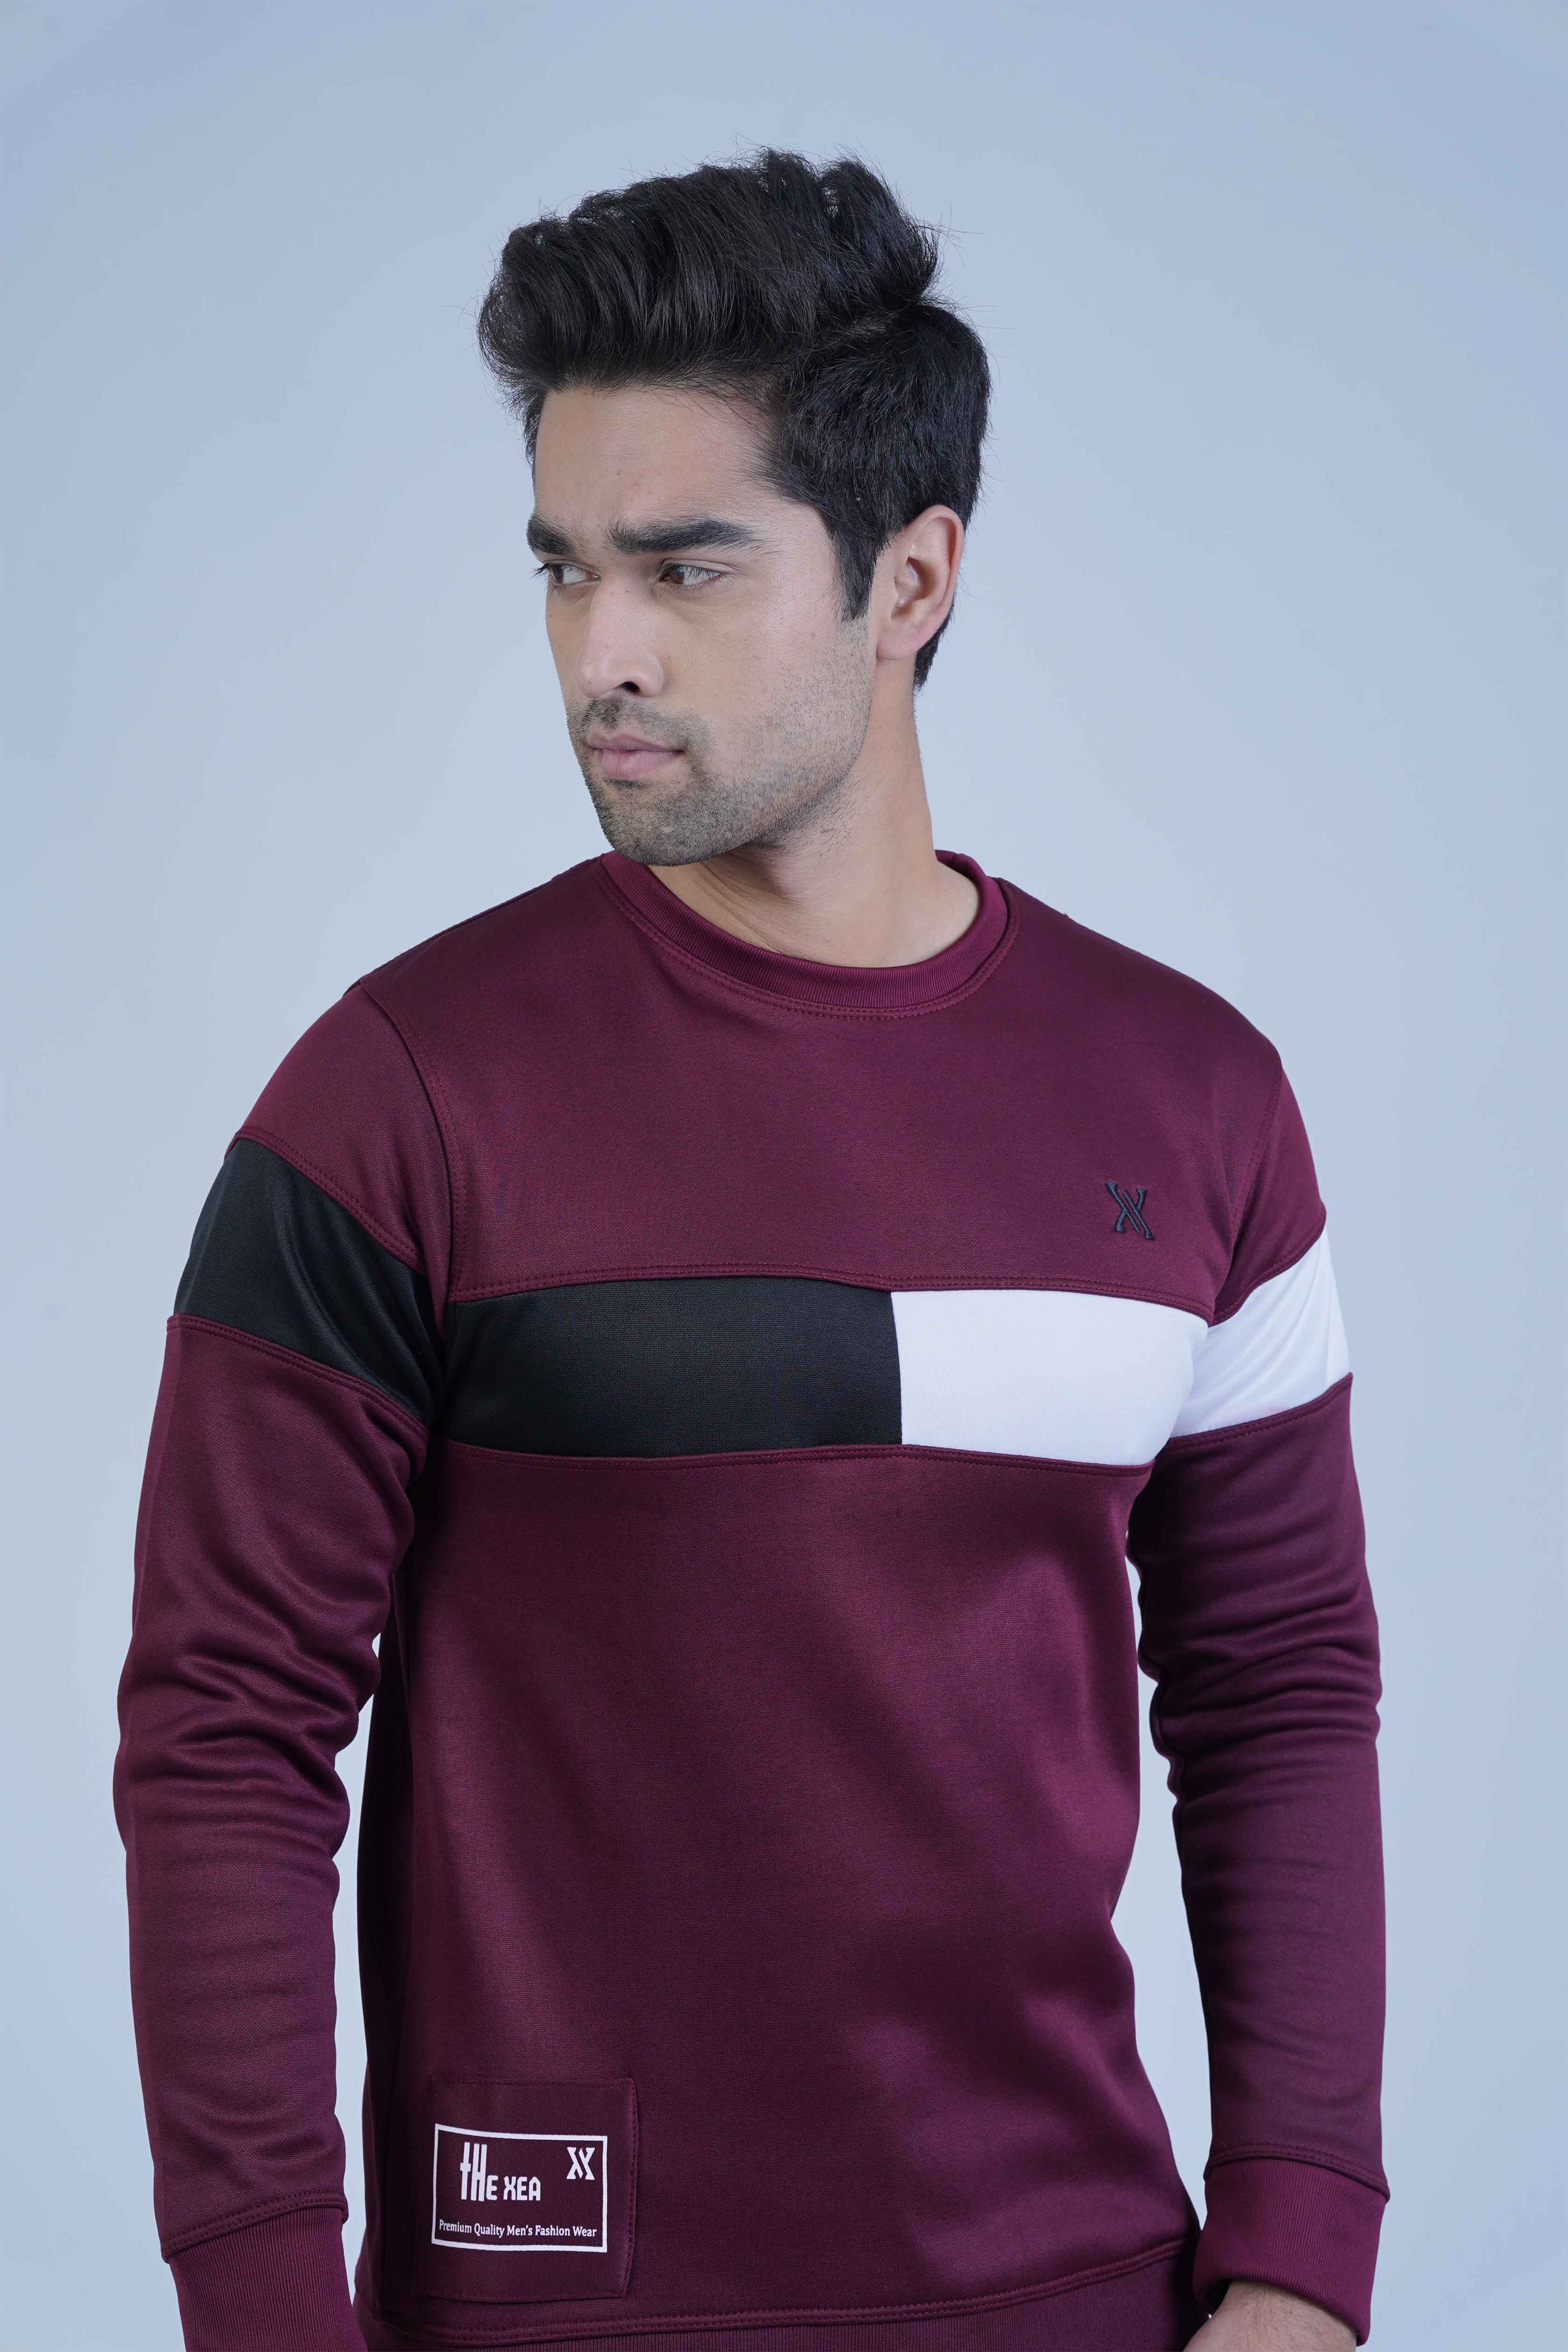 Premium Quality: Urban Stripe Maroon Sweatshirt by The Xea